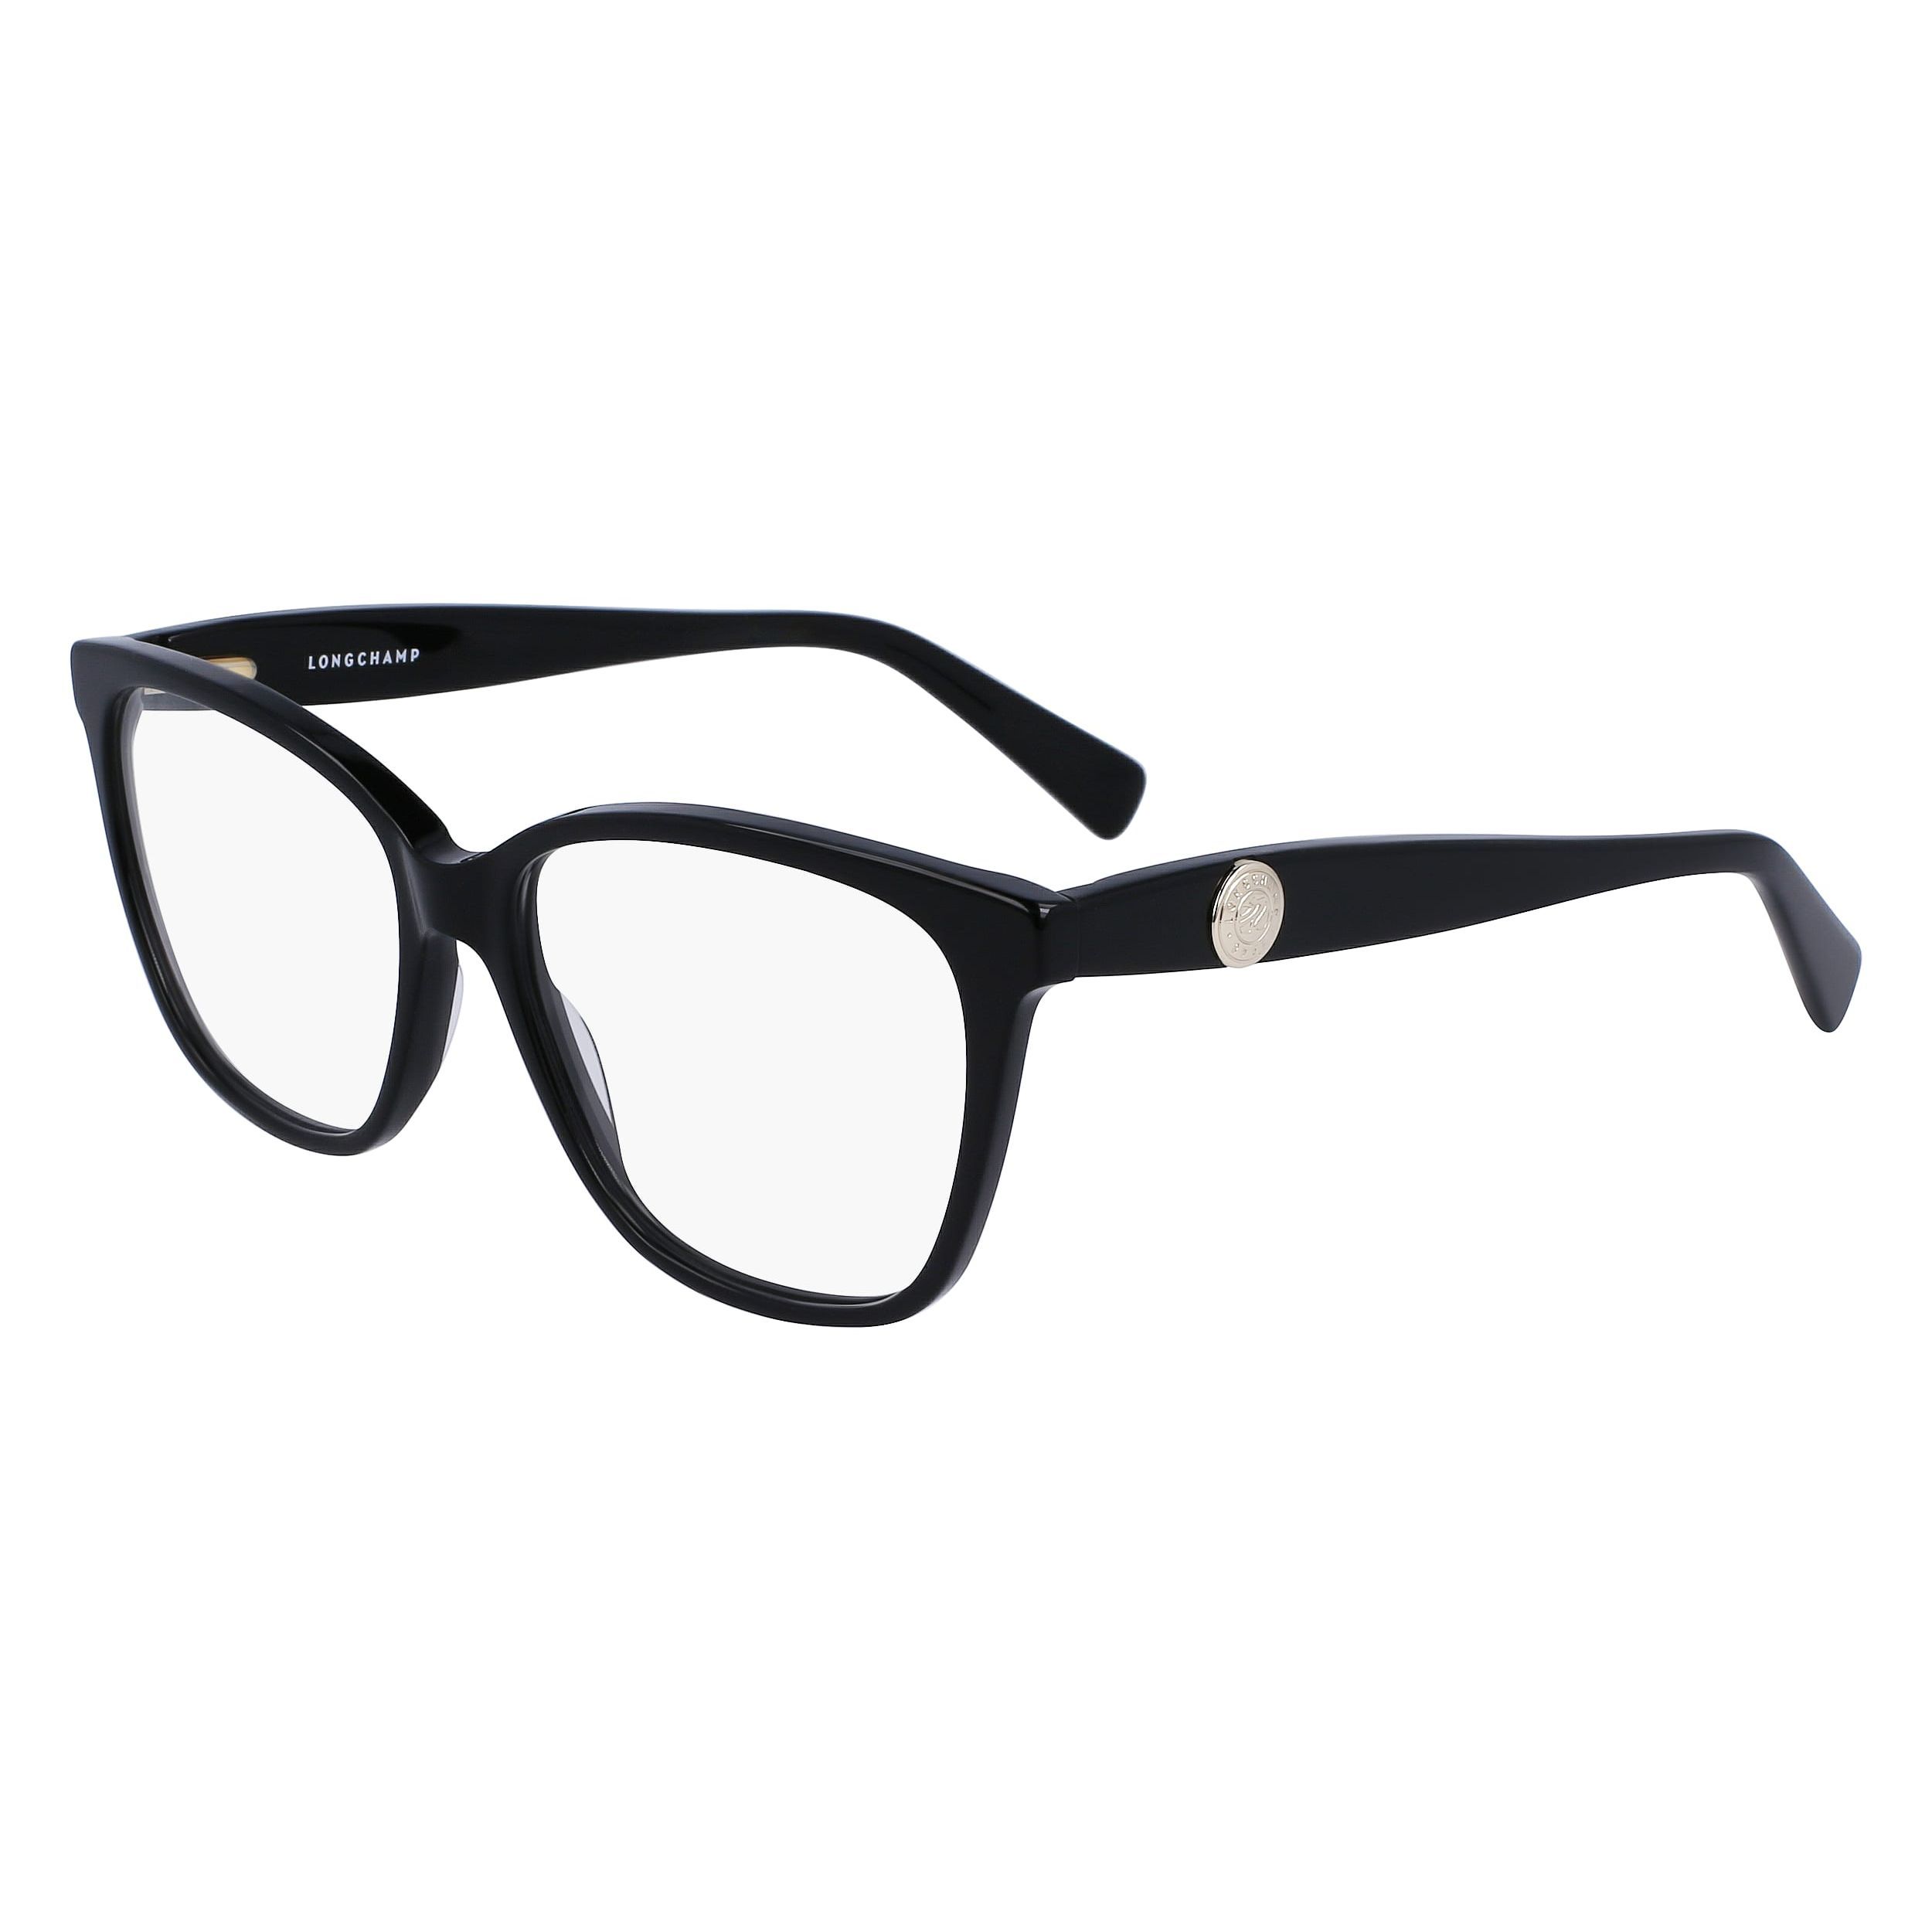 LO2715 Square Eyeglasses 001 - size 52